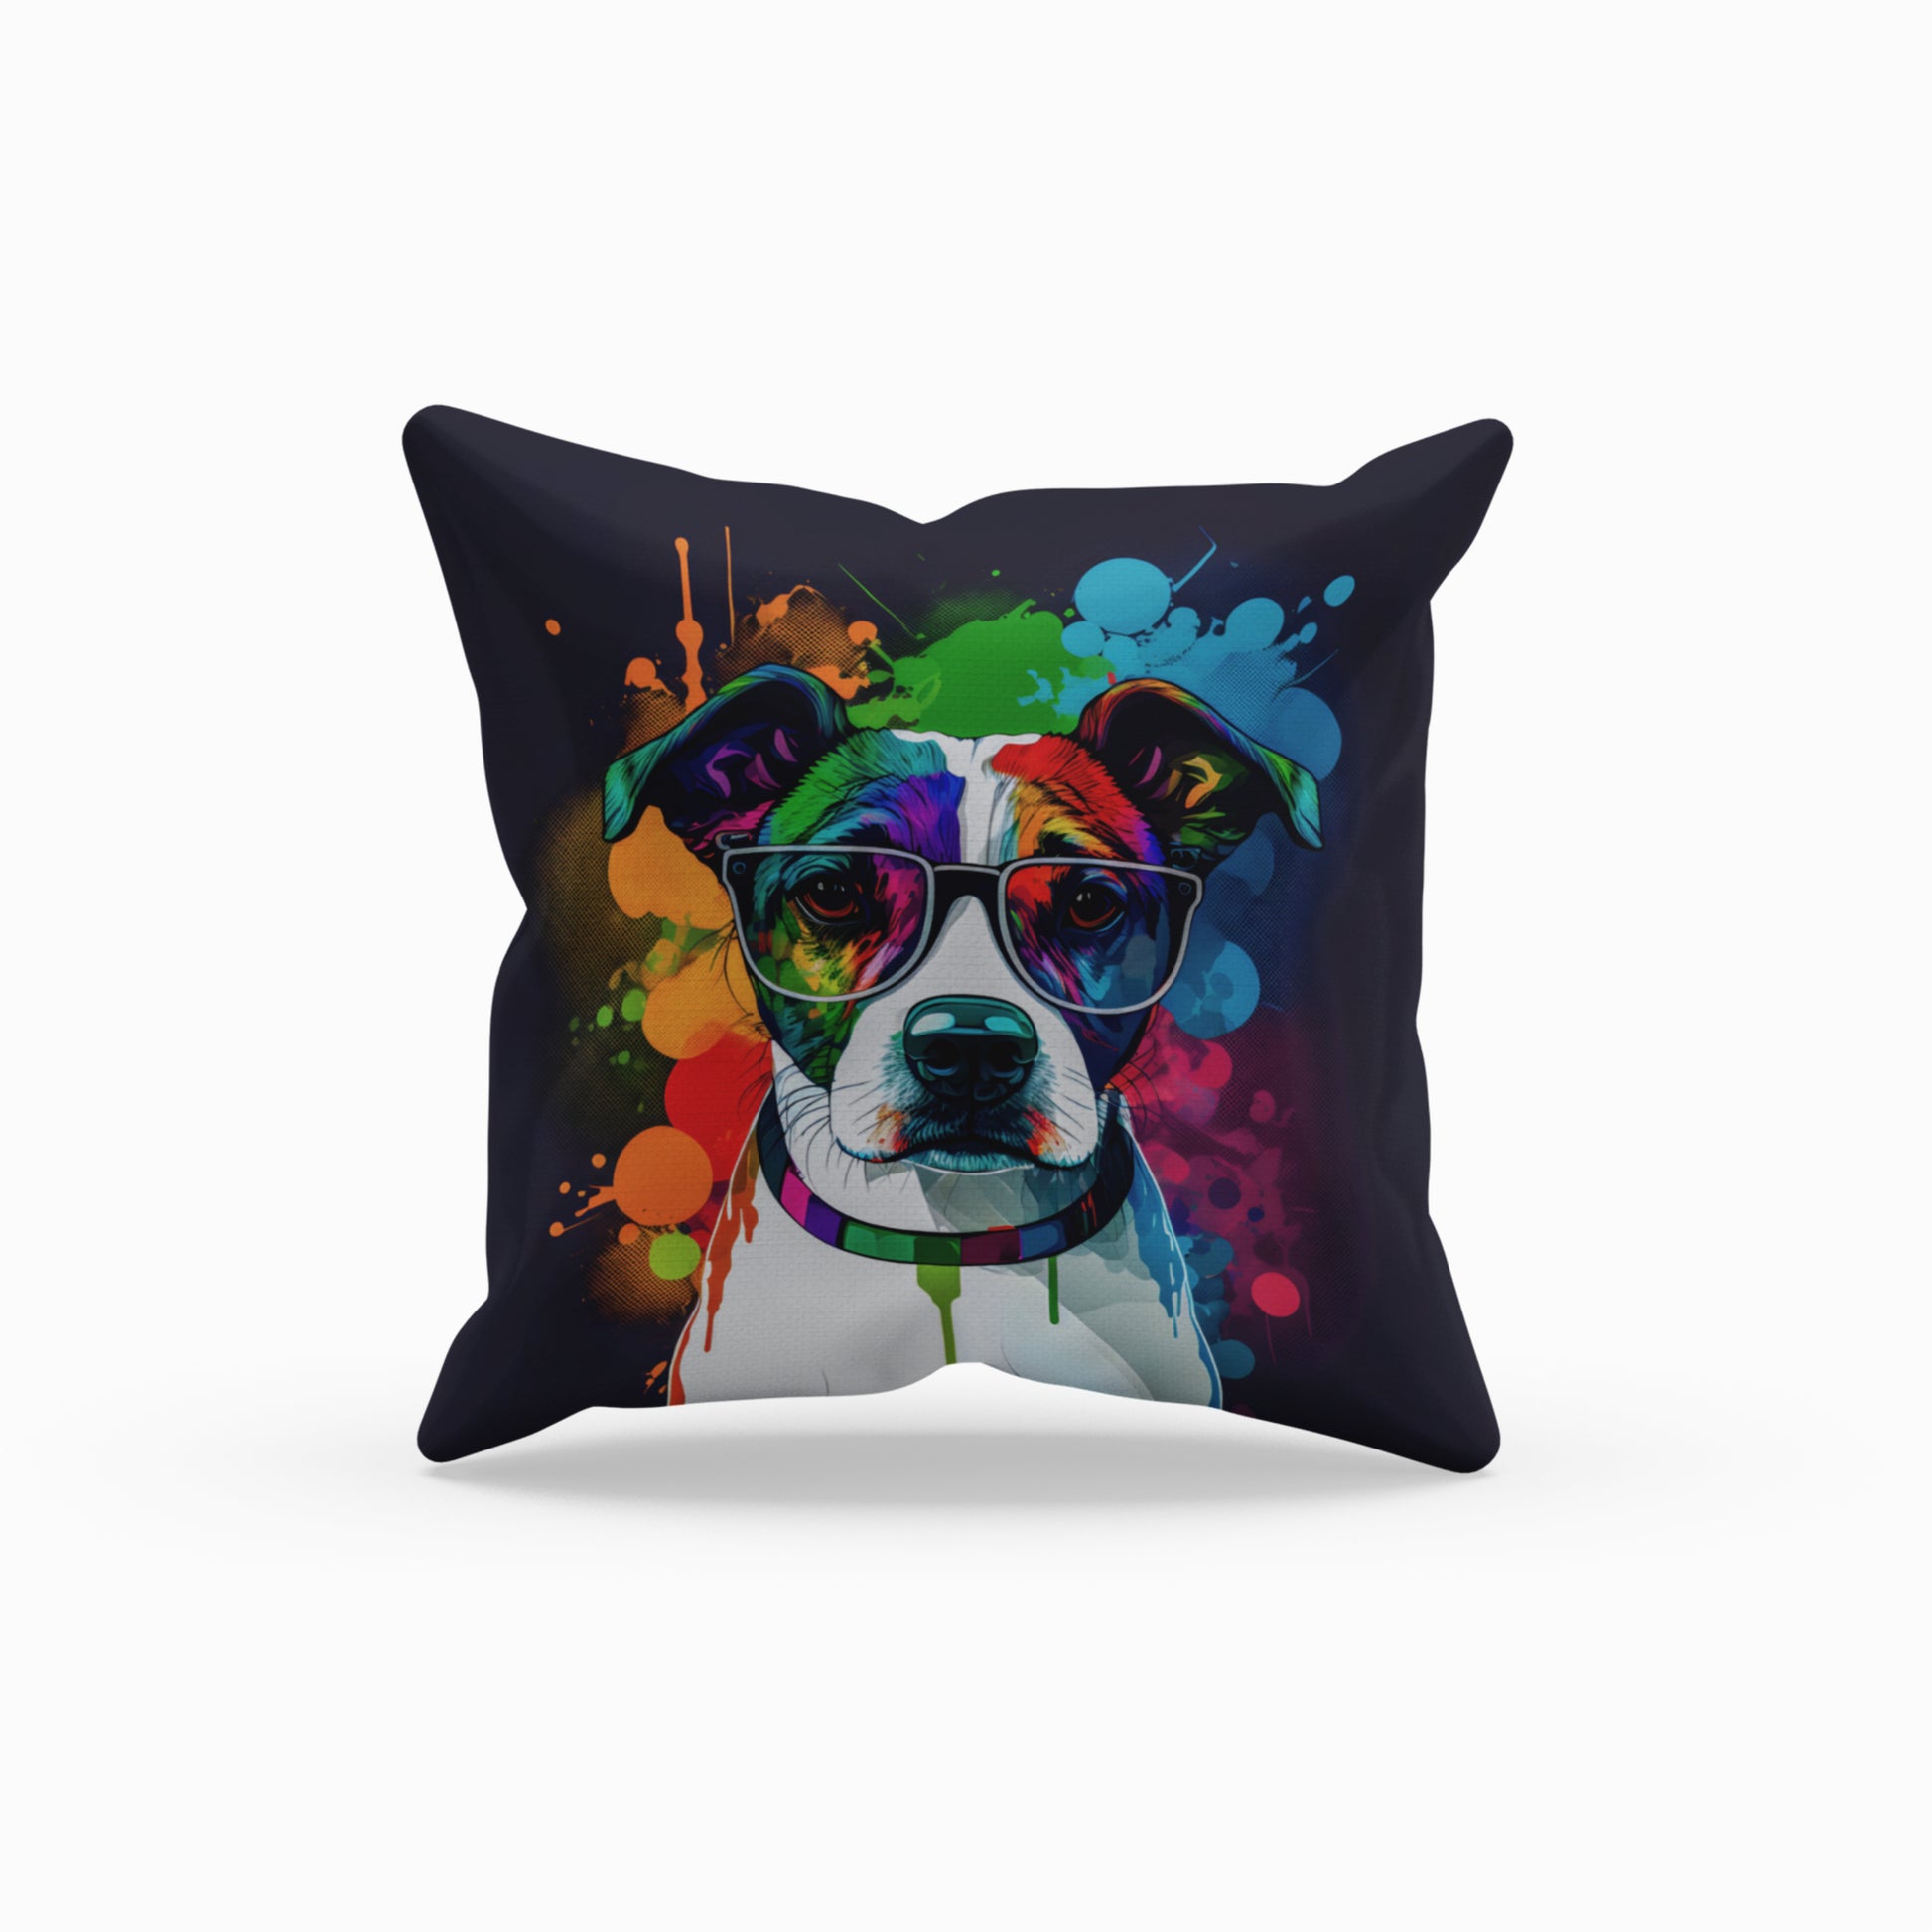 Homeezone's Colourful Dog Theme Pillow